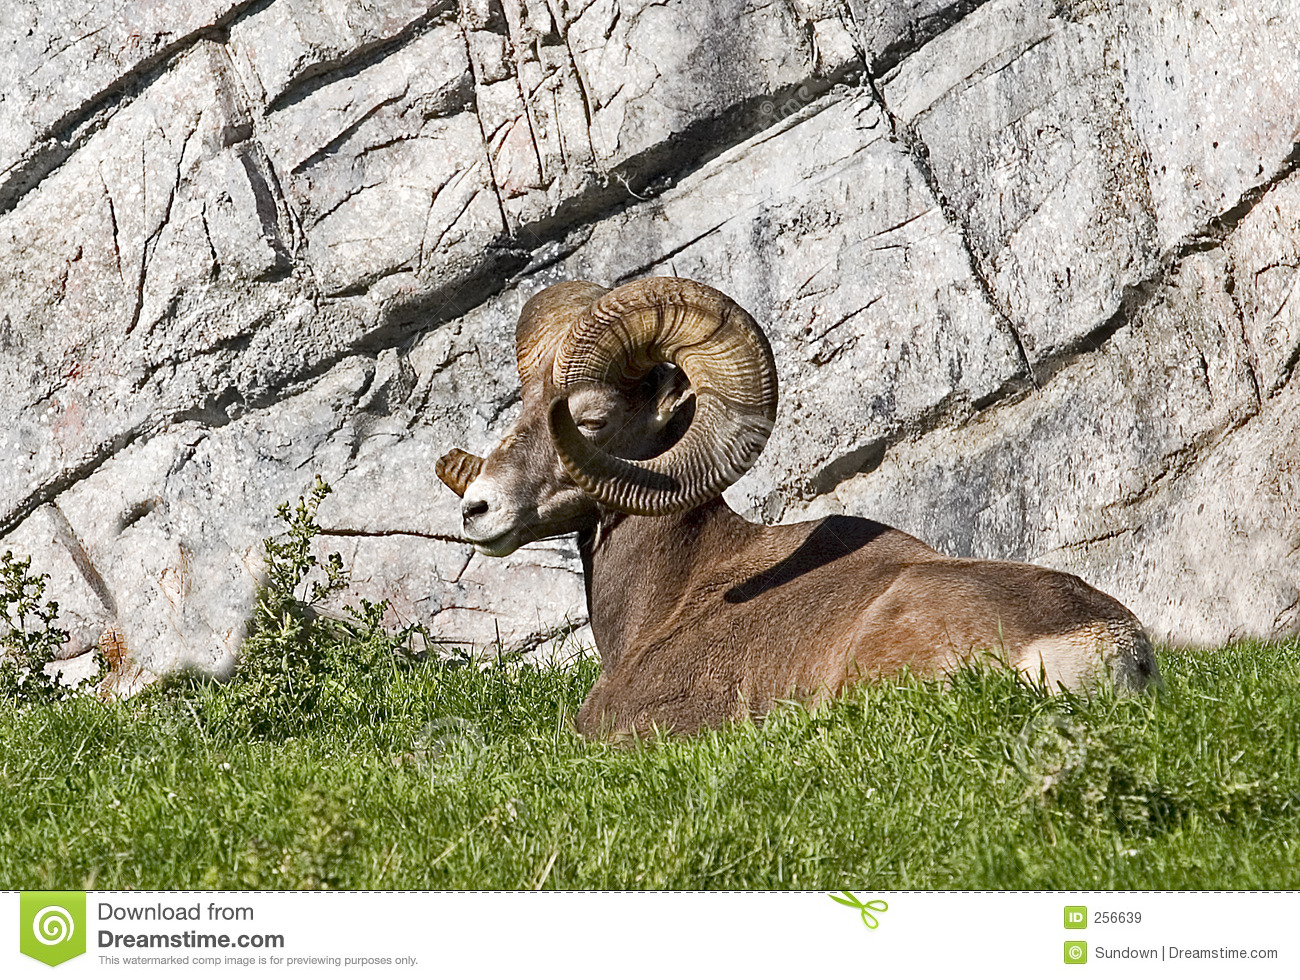 Big Horn Sheep Royalty Free Stock Images   Image  256639